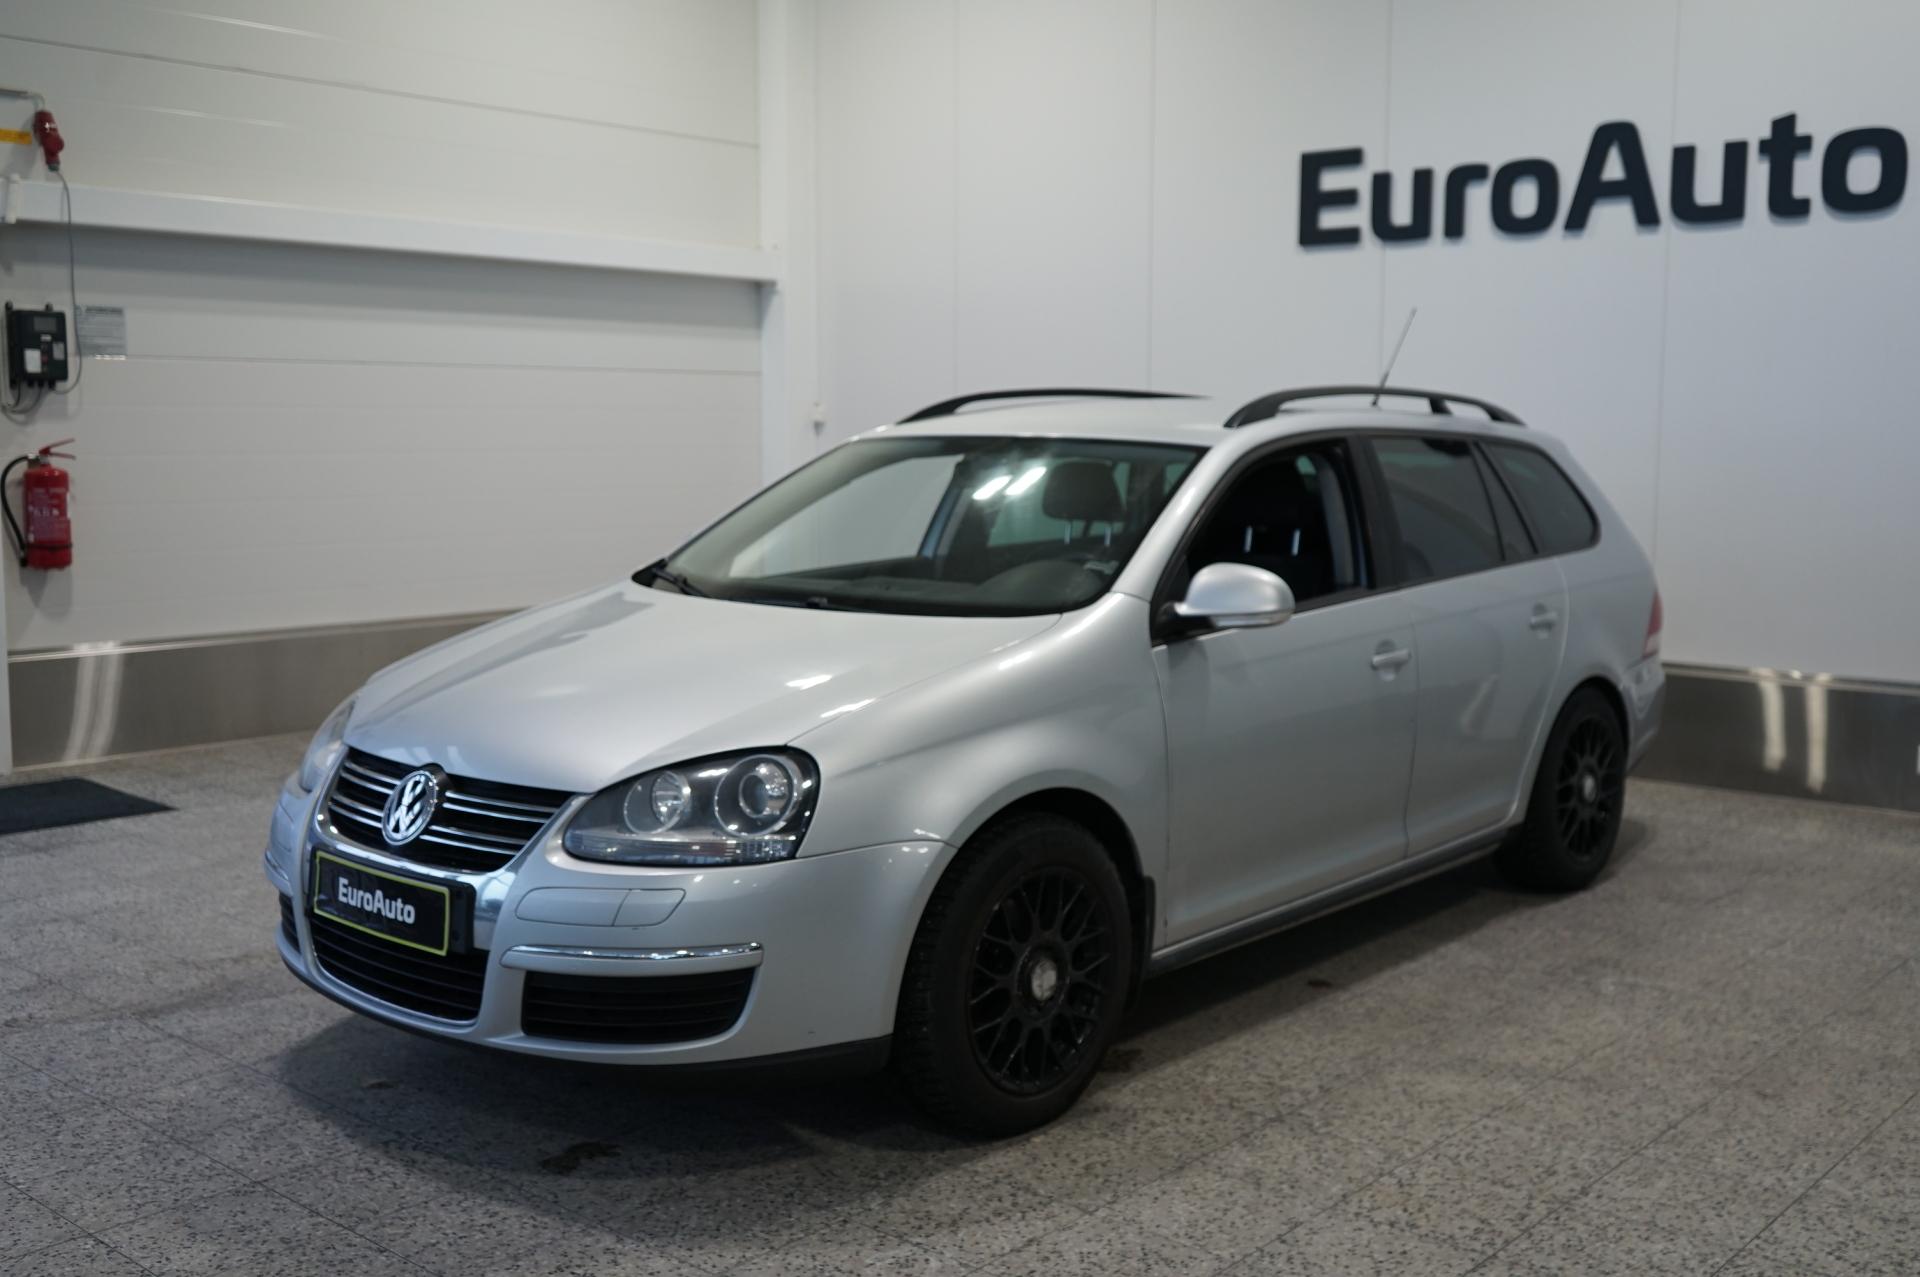 Volkswagen Golf - EuroAuto